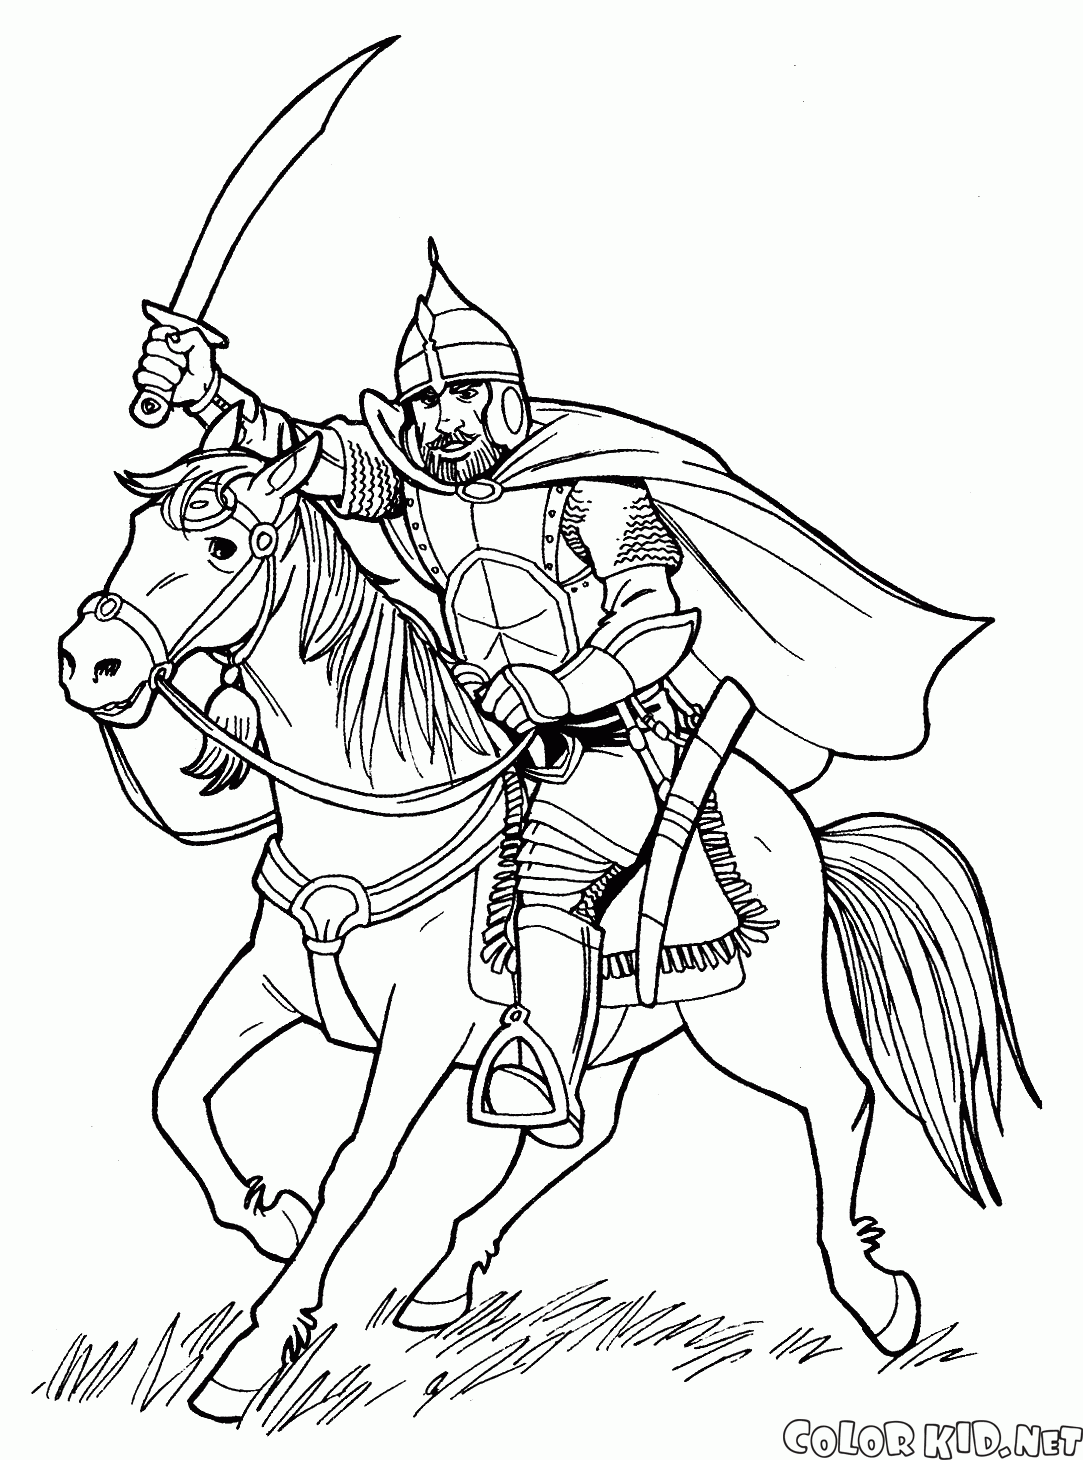 Voivod in ceremonial armor